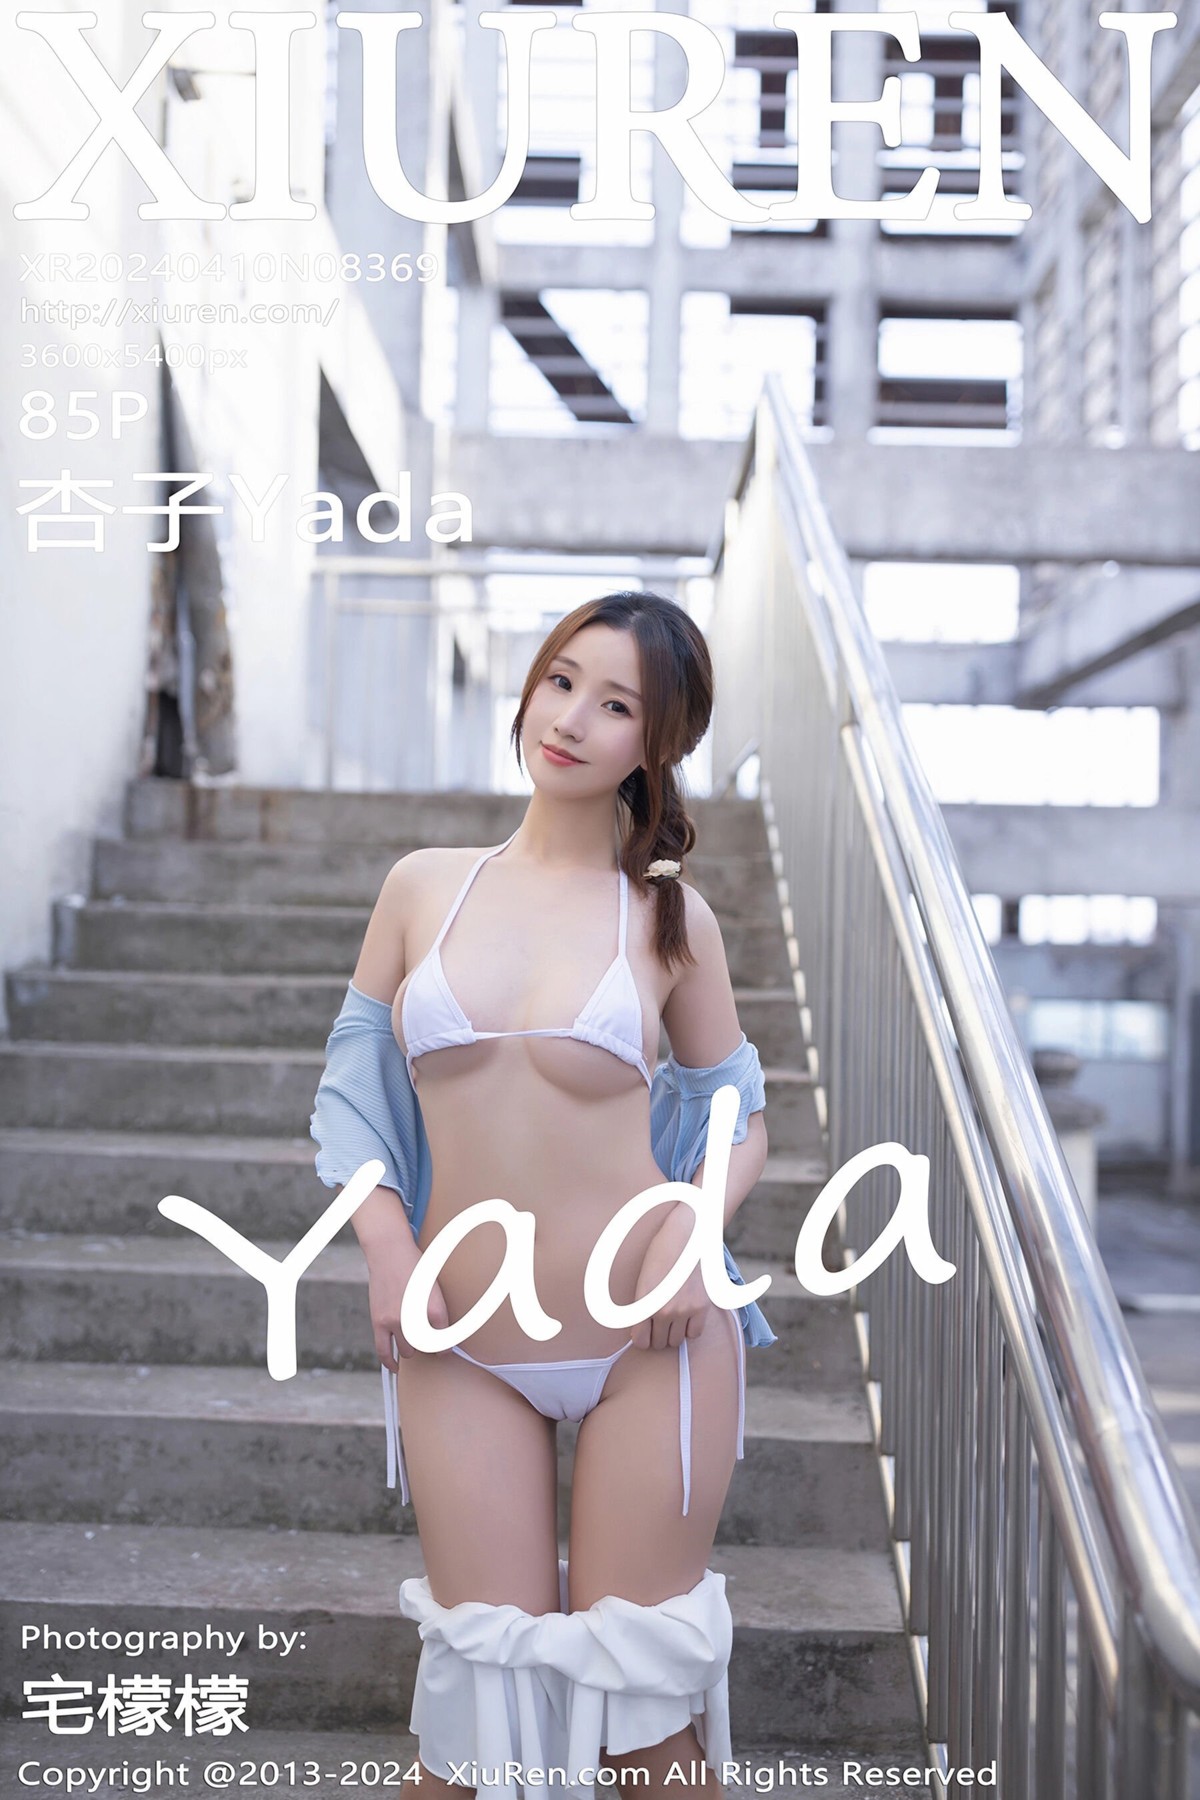 杏子Yada_(1_86).jpg